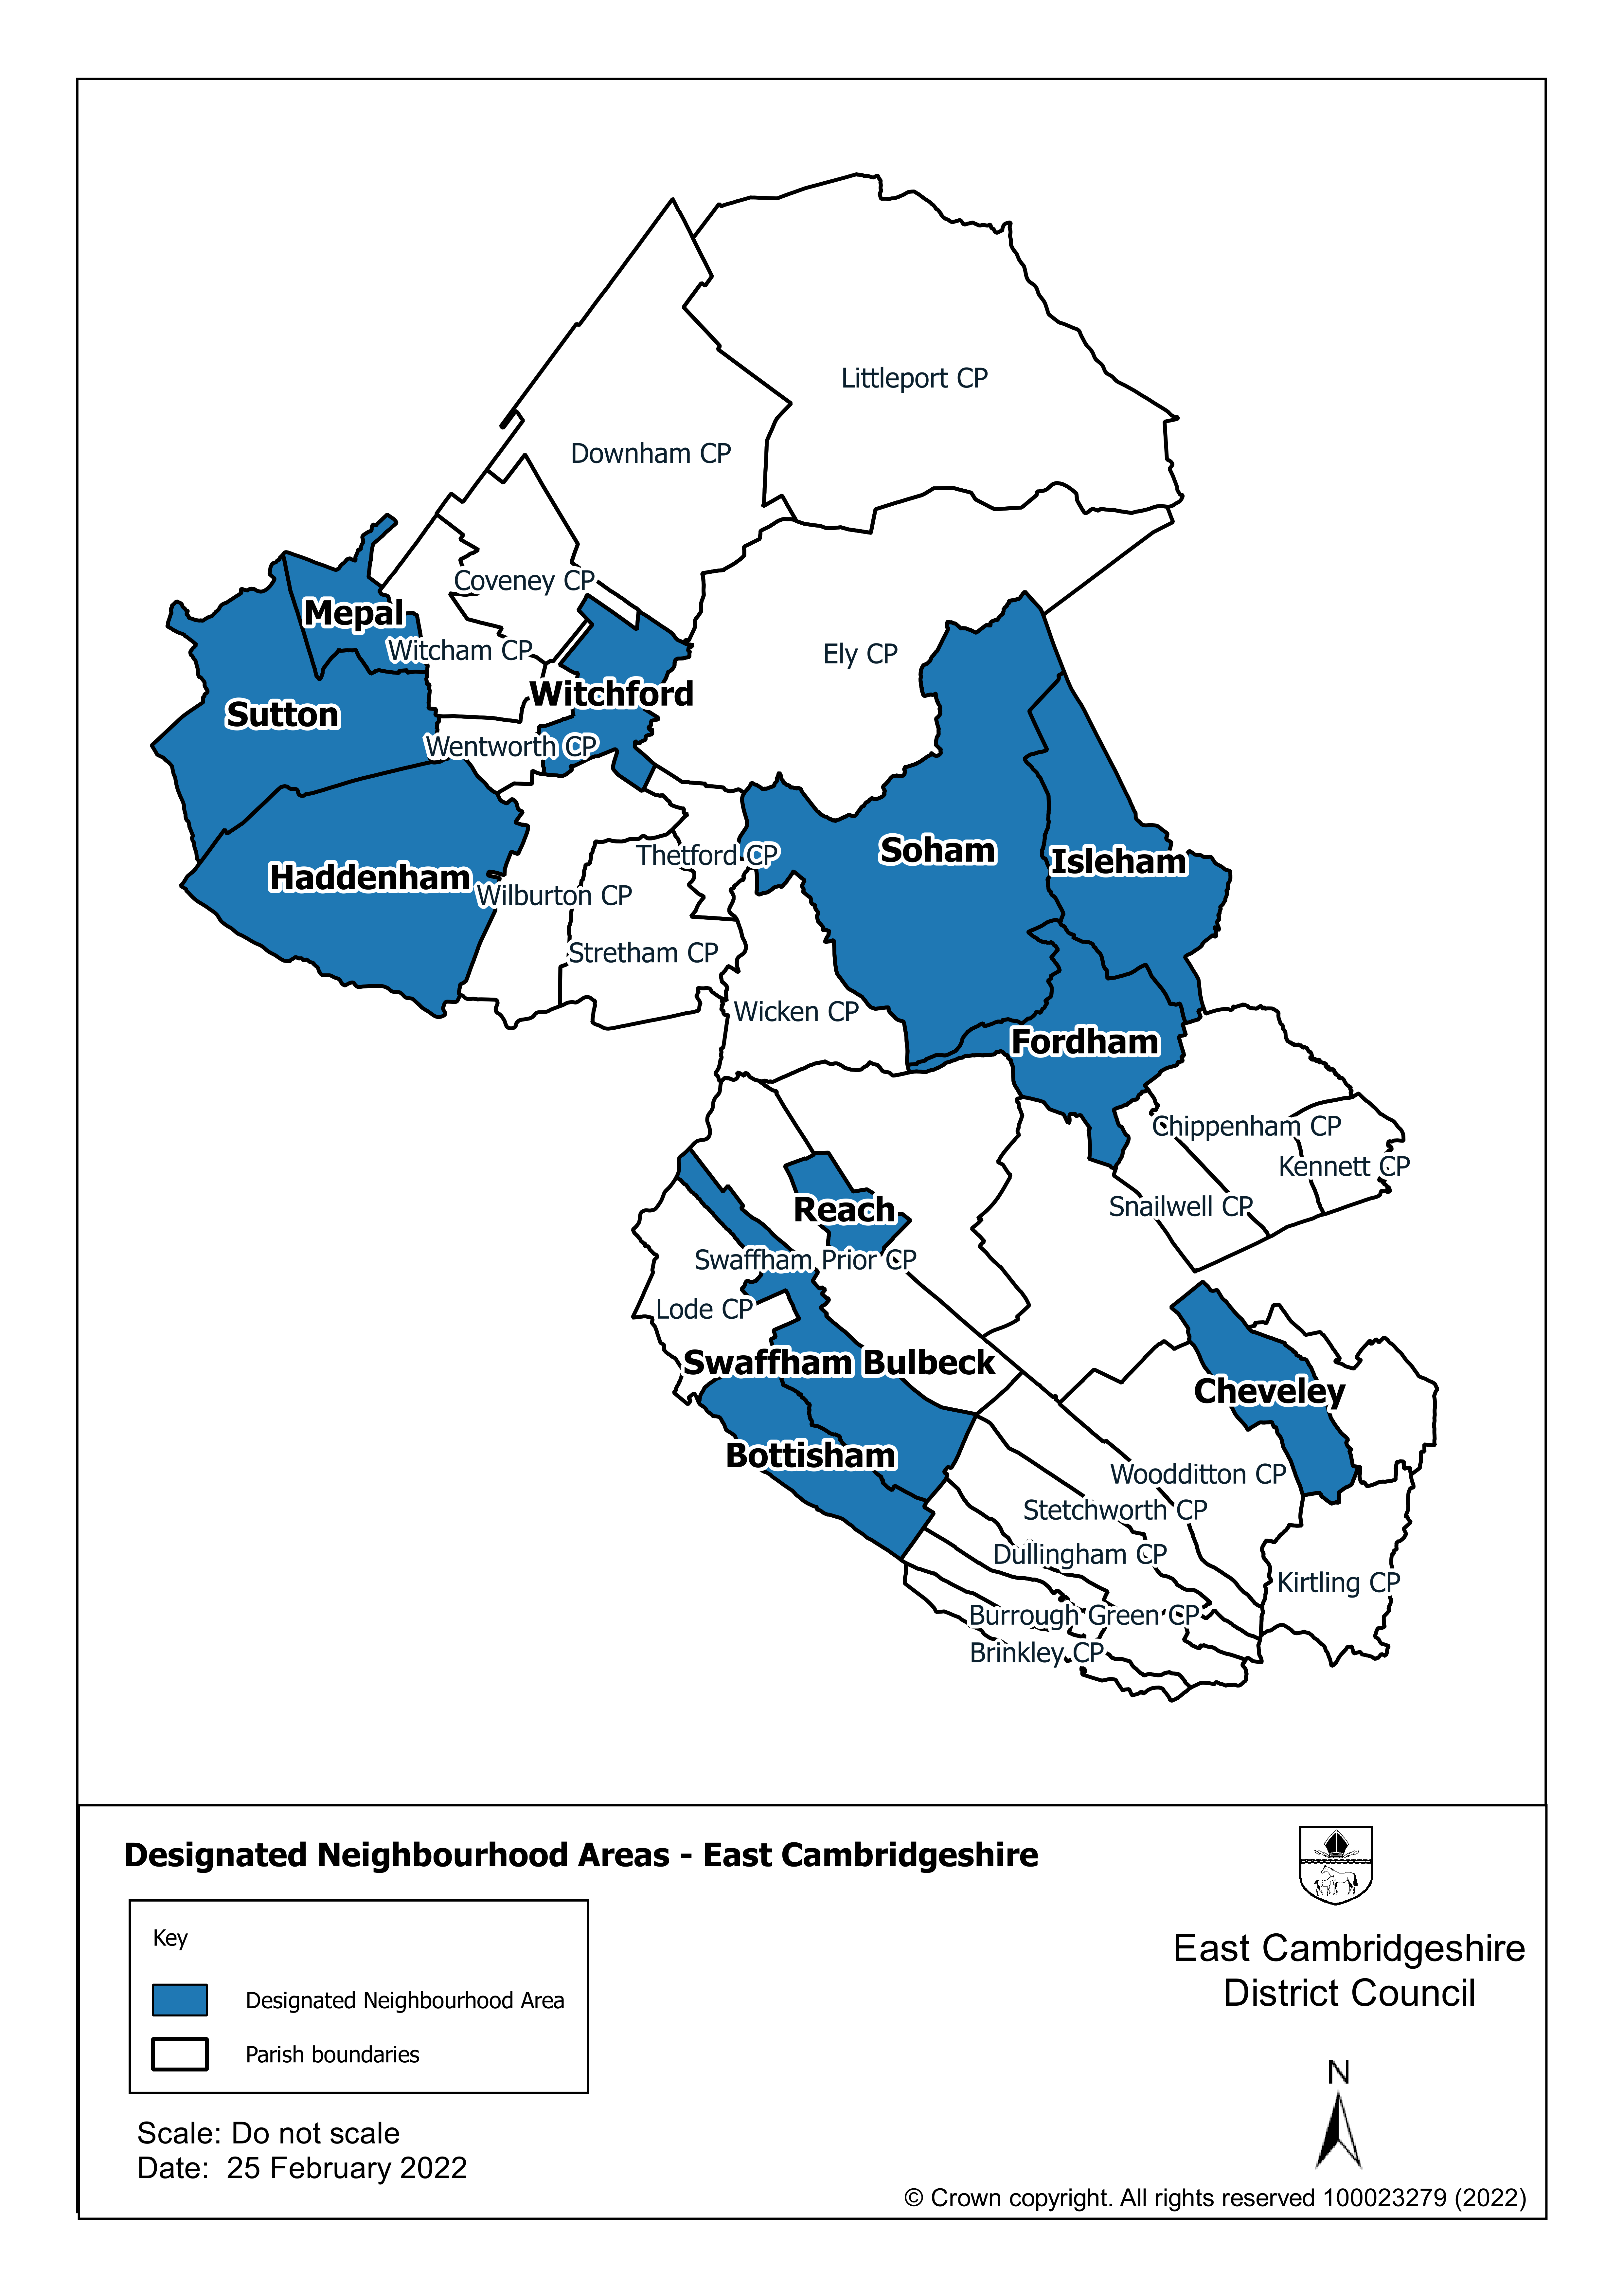 Designated Neighbourhood Areas in East Cambridgeshire